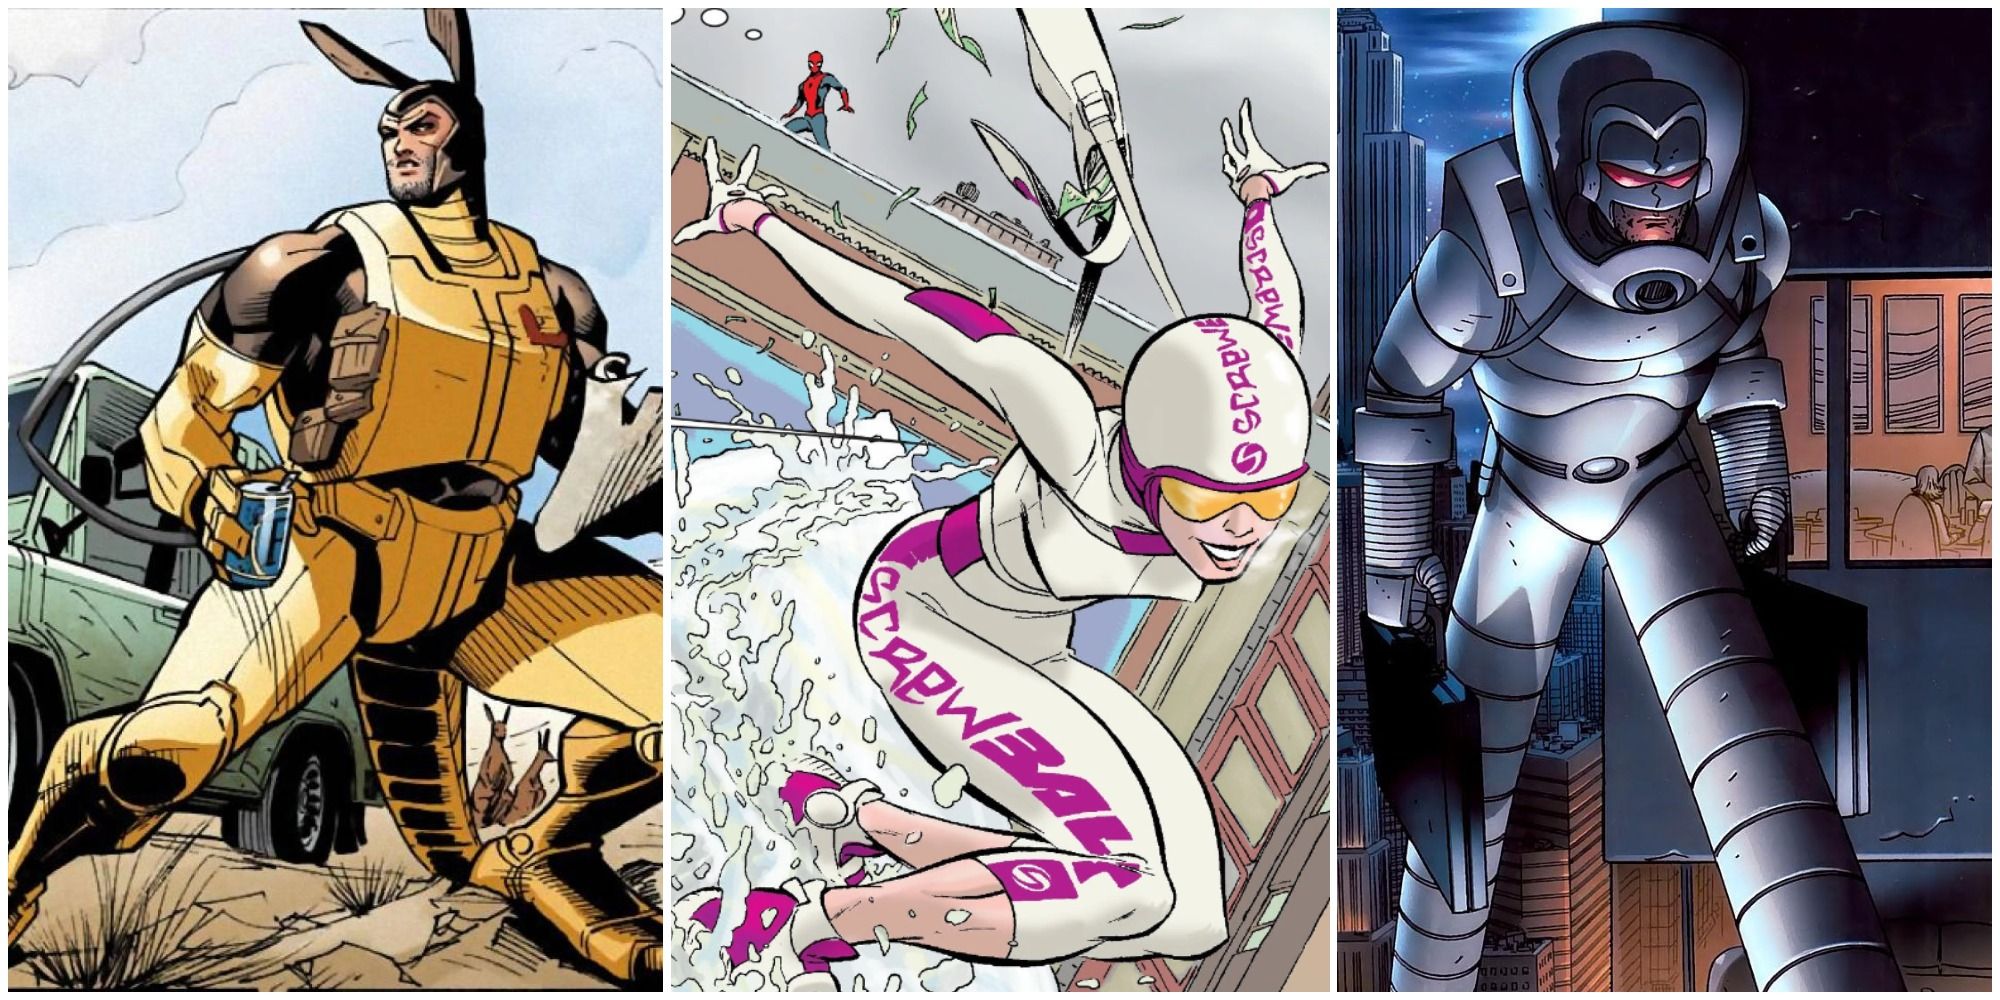 Villains Kangaroo, Screwball and Stilt-Man from Marvel Comics